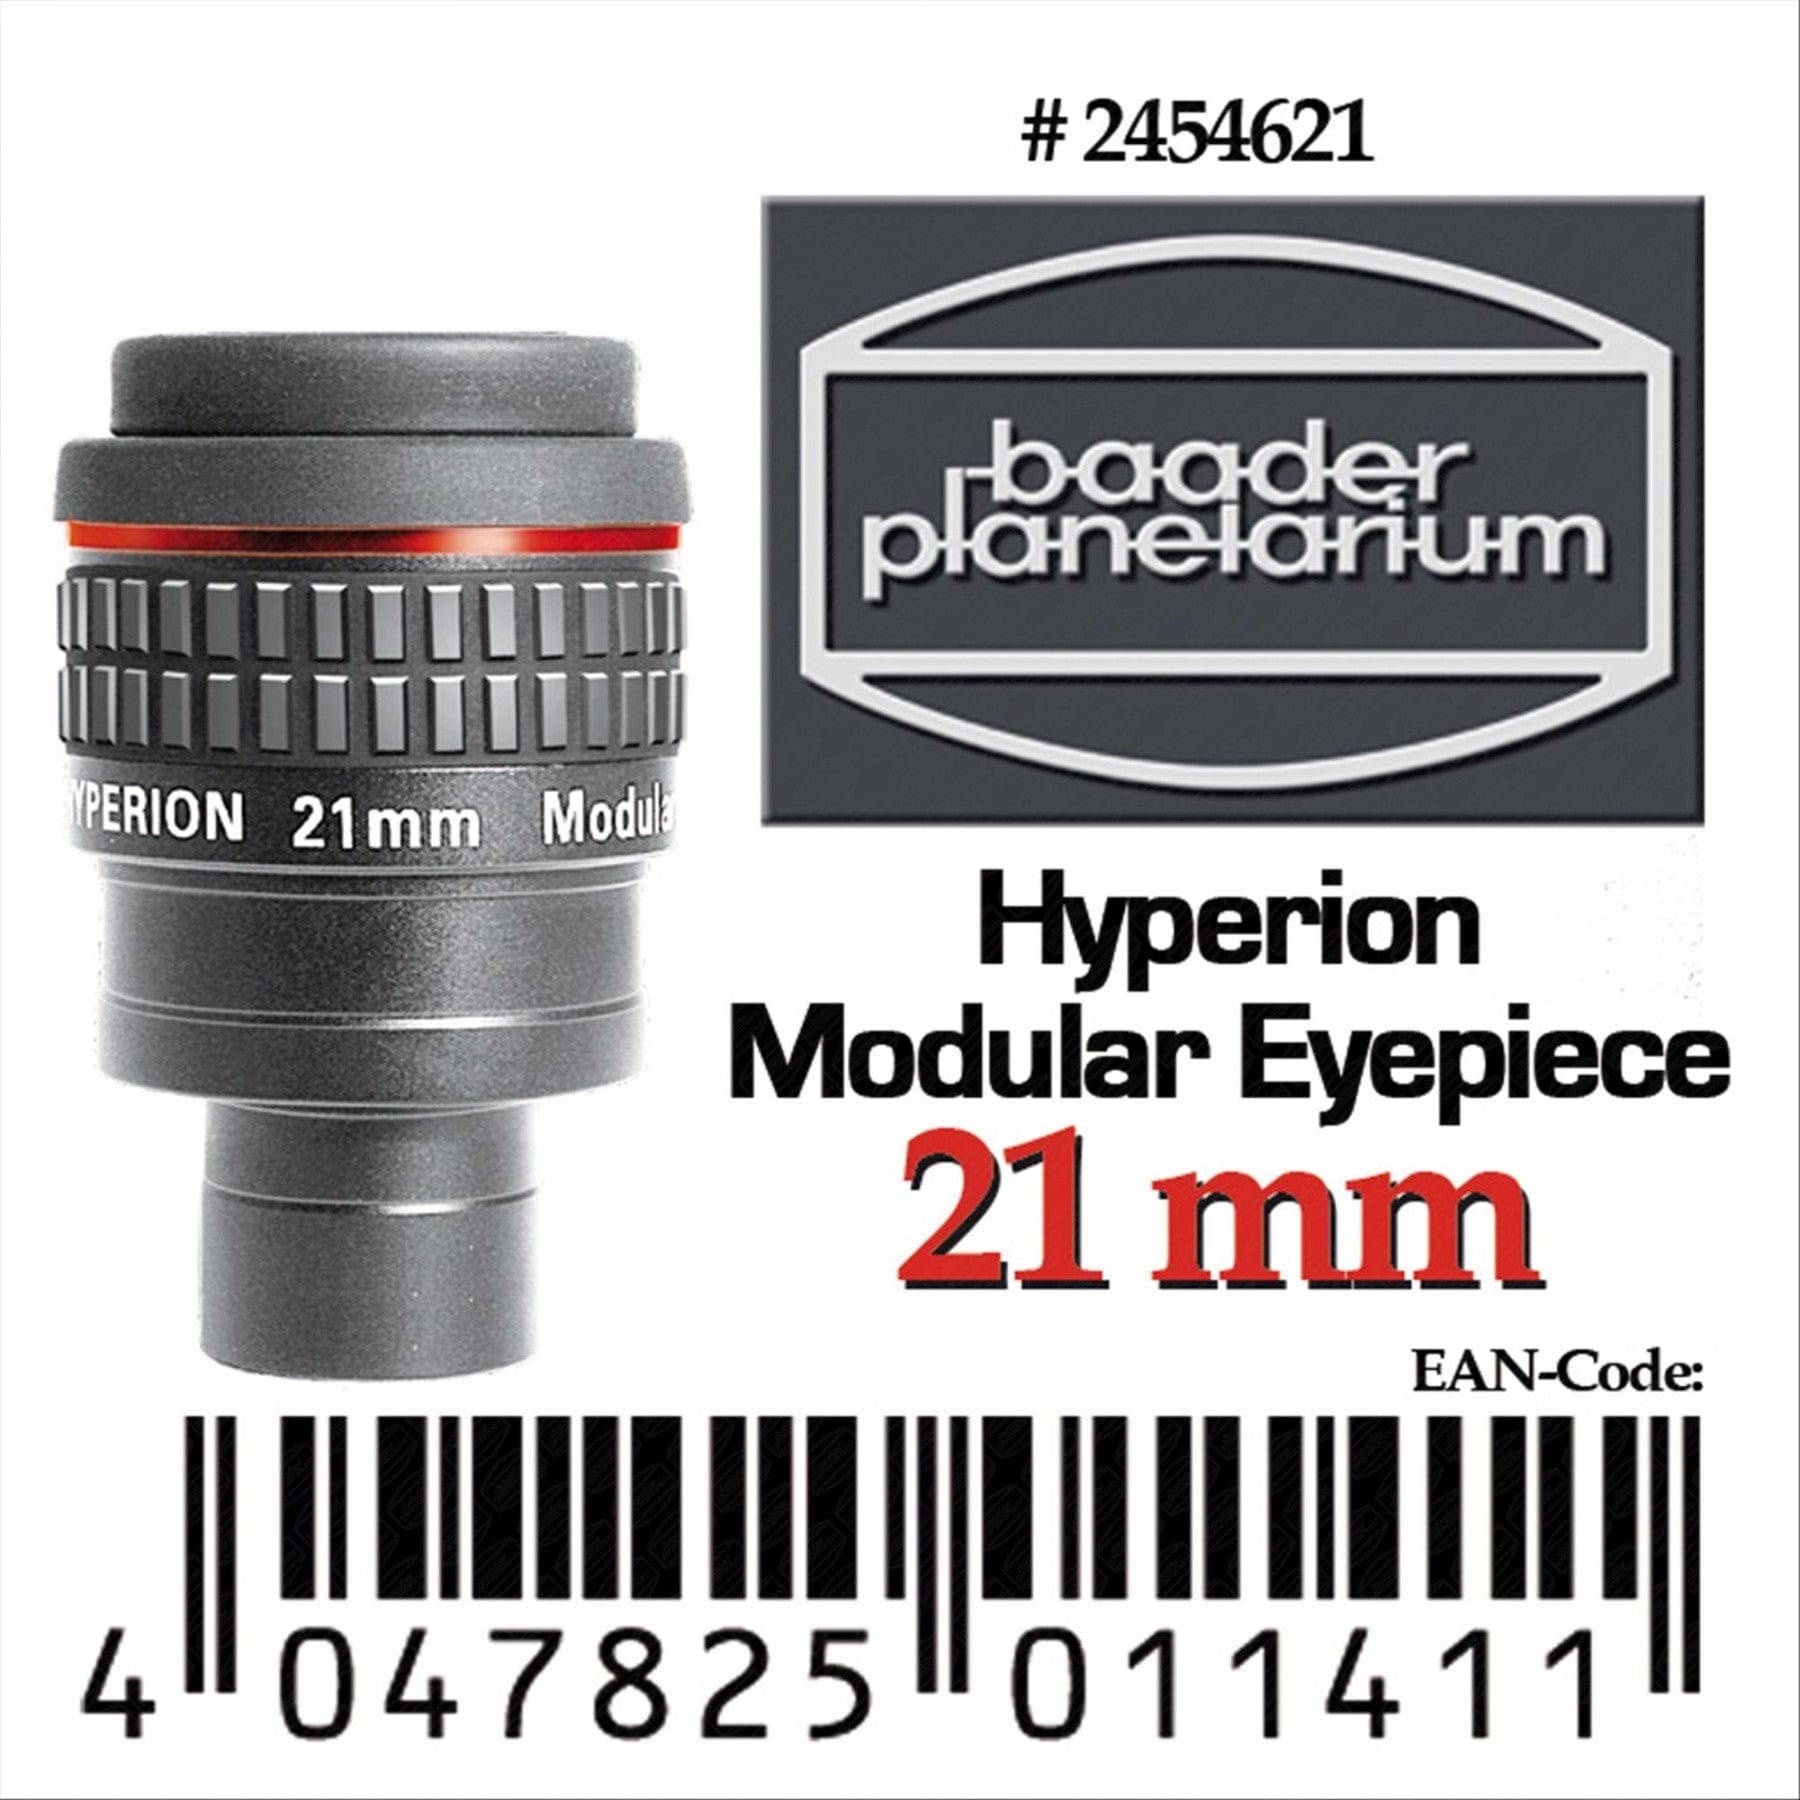 Baader Planetarium Eyepiece Baader Hyperion 21mm 68 Degree Modular Eyepiece - 2454621